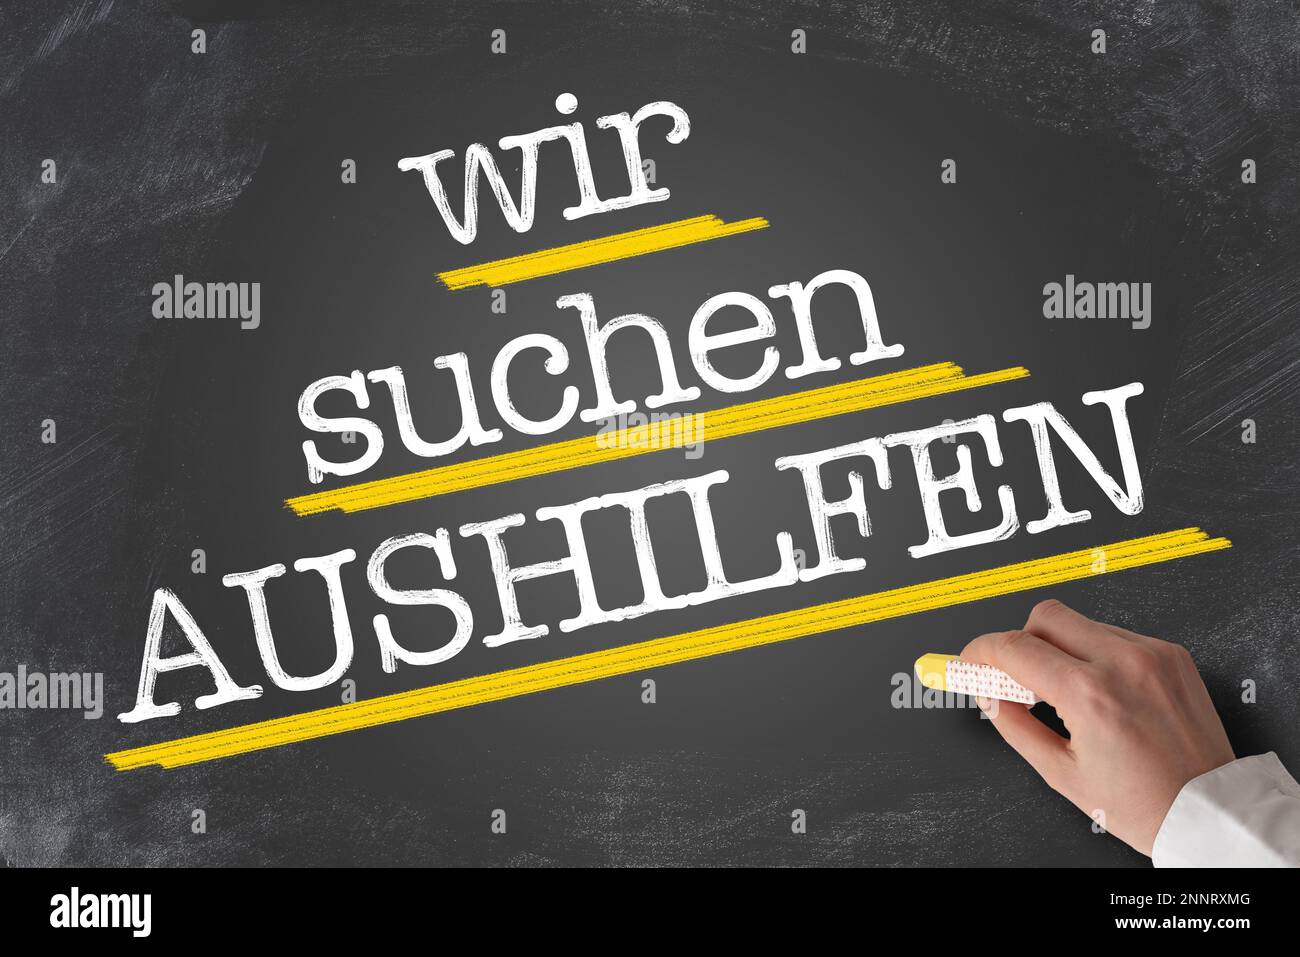 text WIR SUCHEN AUSHILFEN, German for Help Wanted, written on blackboard with hand holding piece of chalk Stock Photo